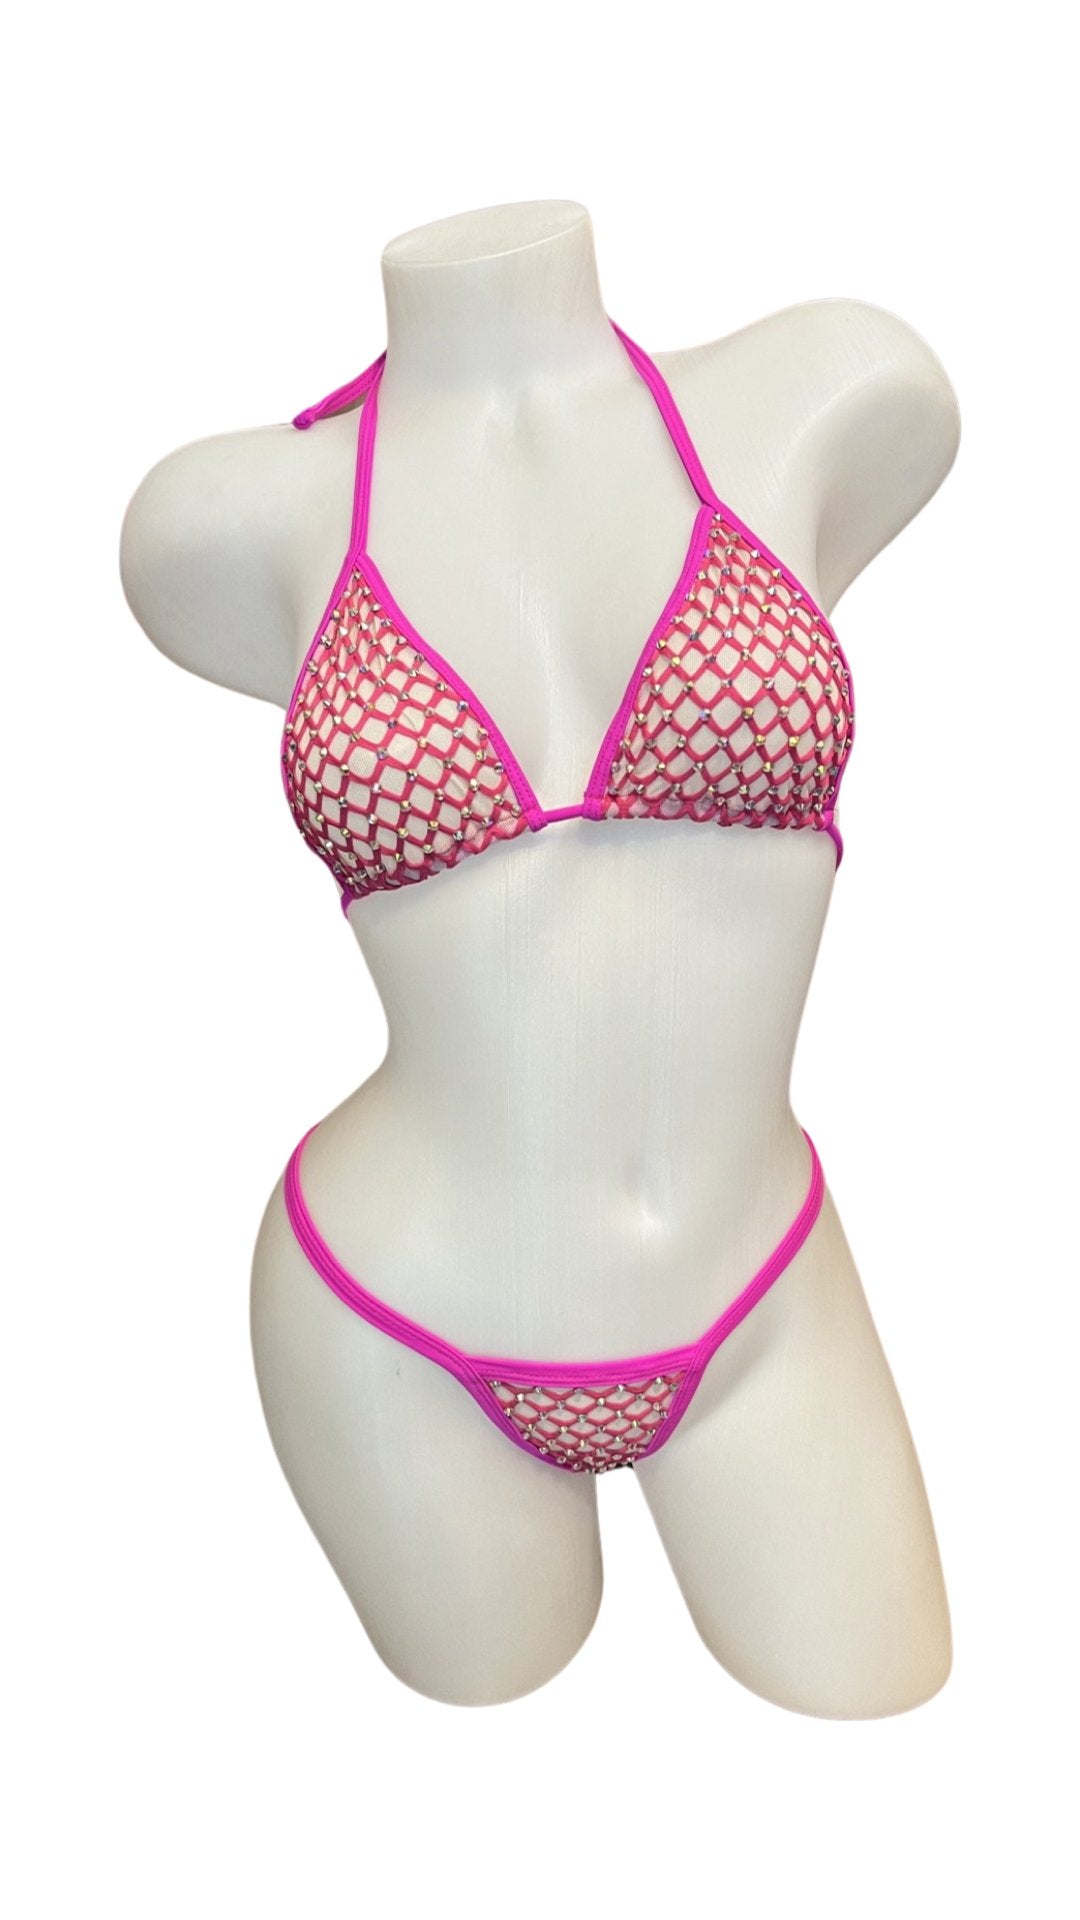 Crystal Bikini - Hot Pink - Model Express VancouverLingerie